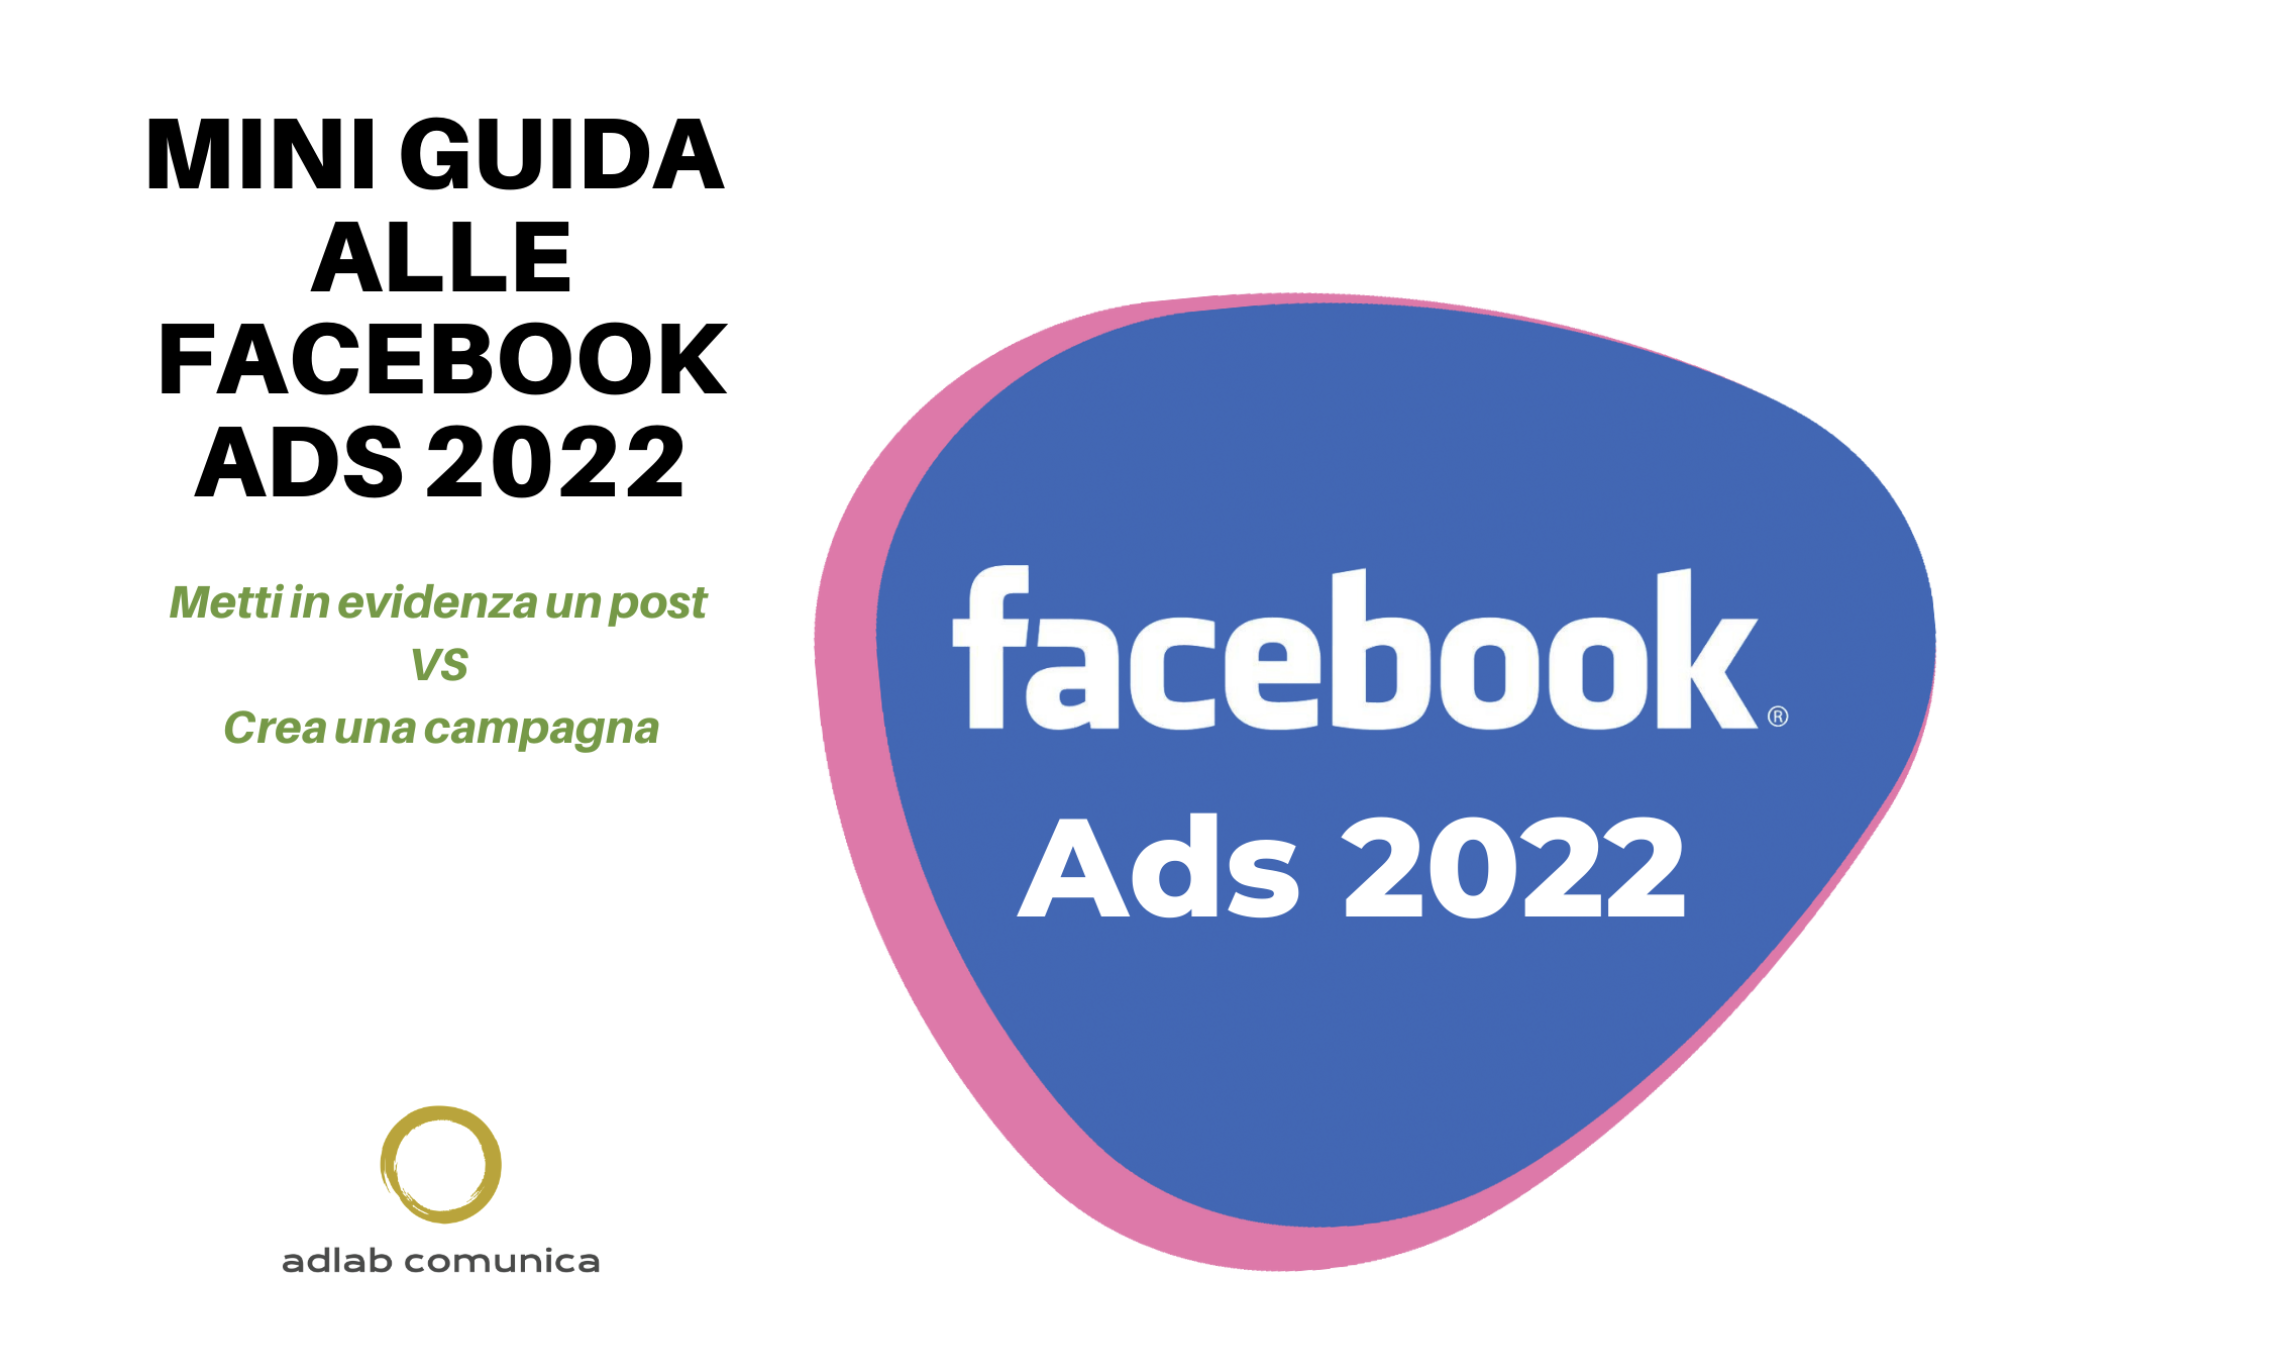 Mini Guida alle Facebook Ads 2022